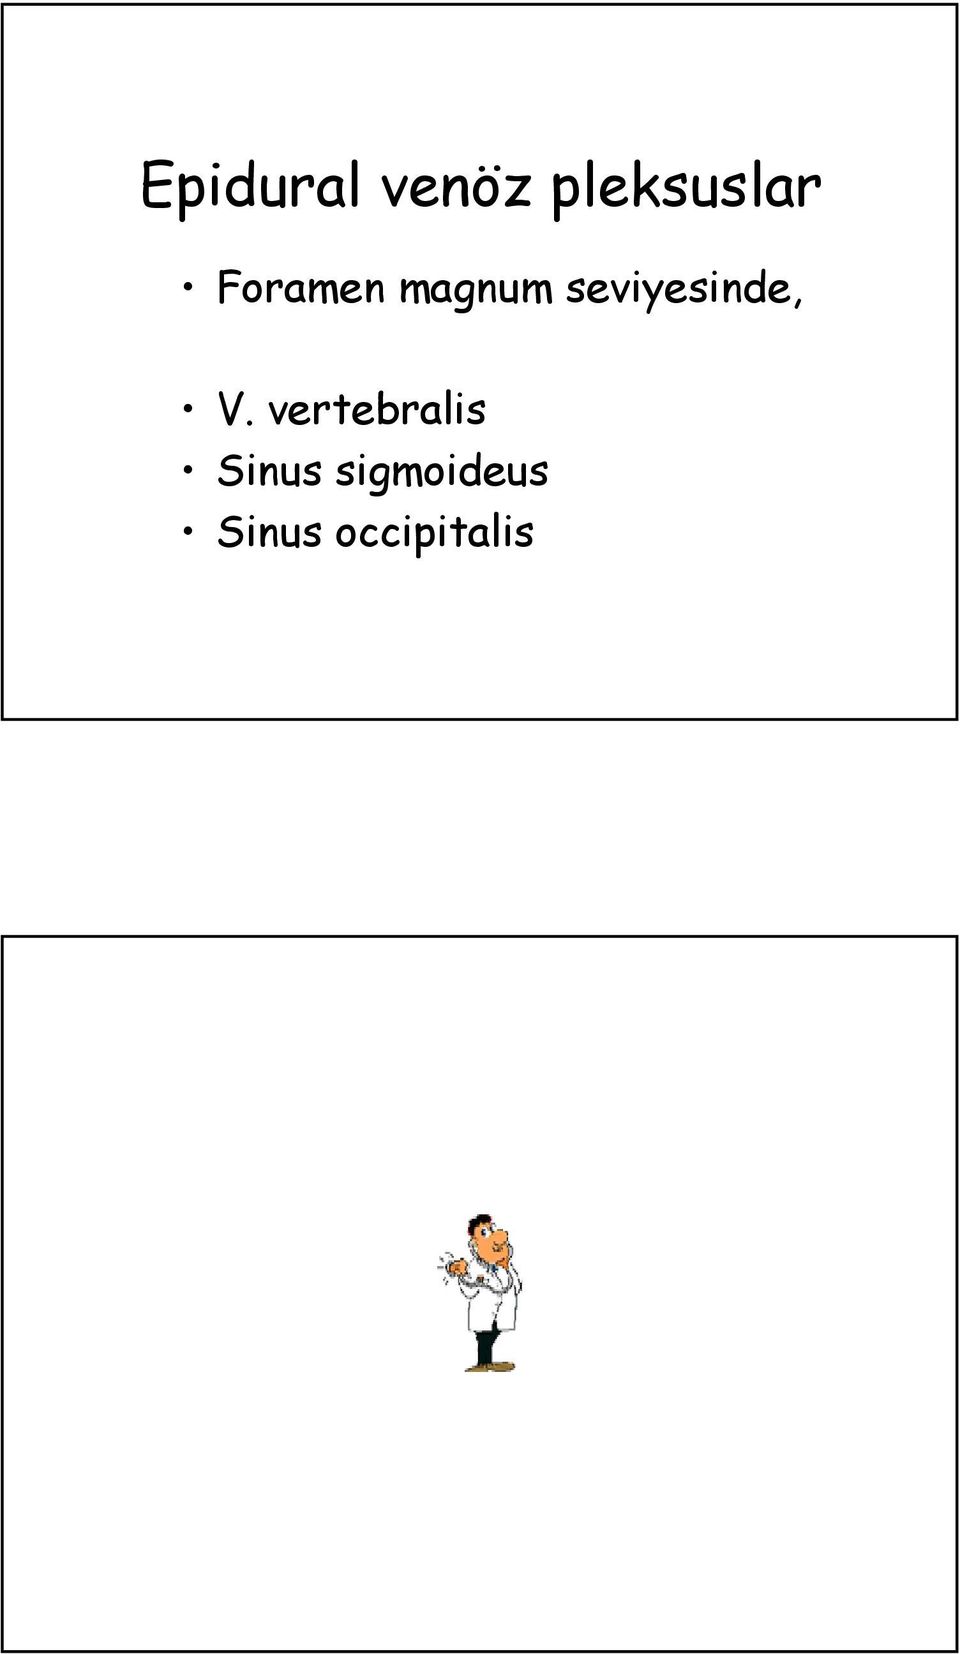 ò V. vertebralis ò Sinus